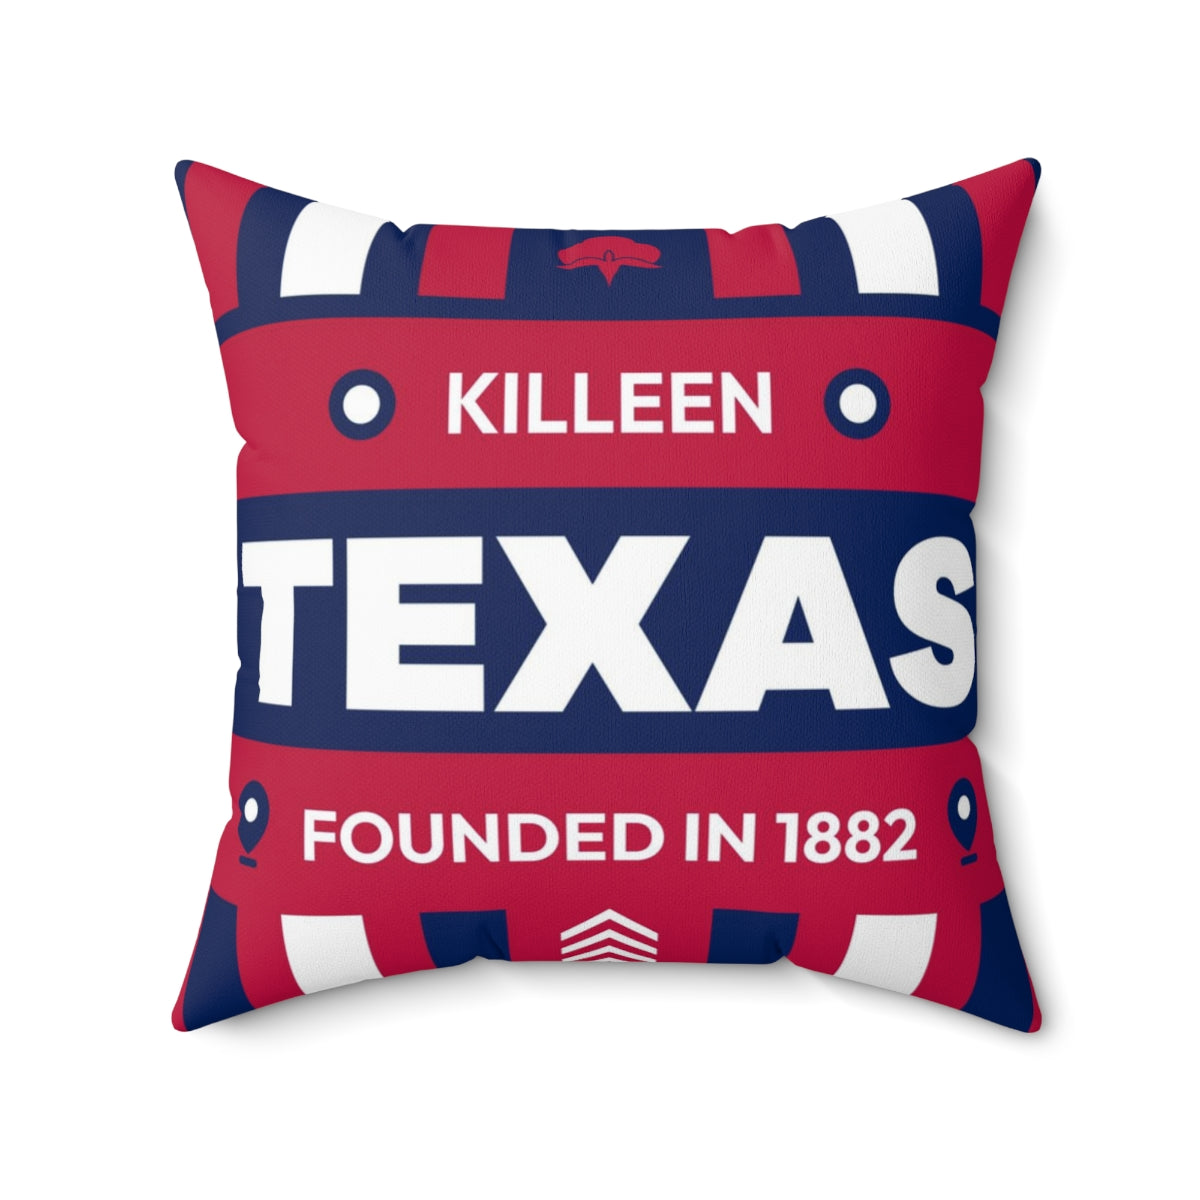 Killeen Texas Polyester Square Pillow